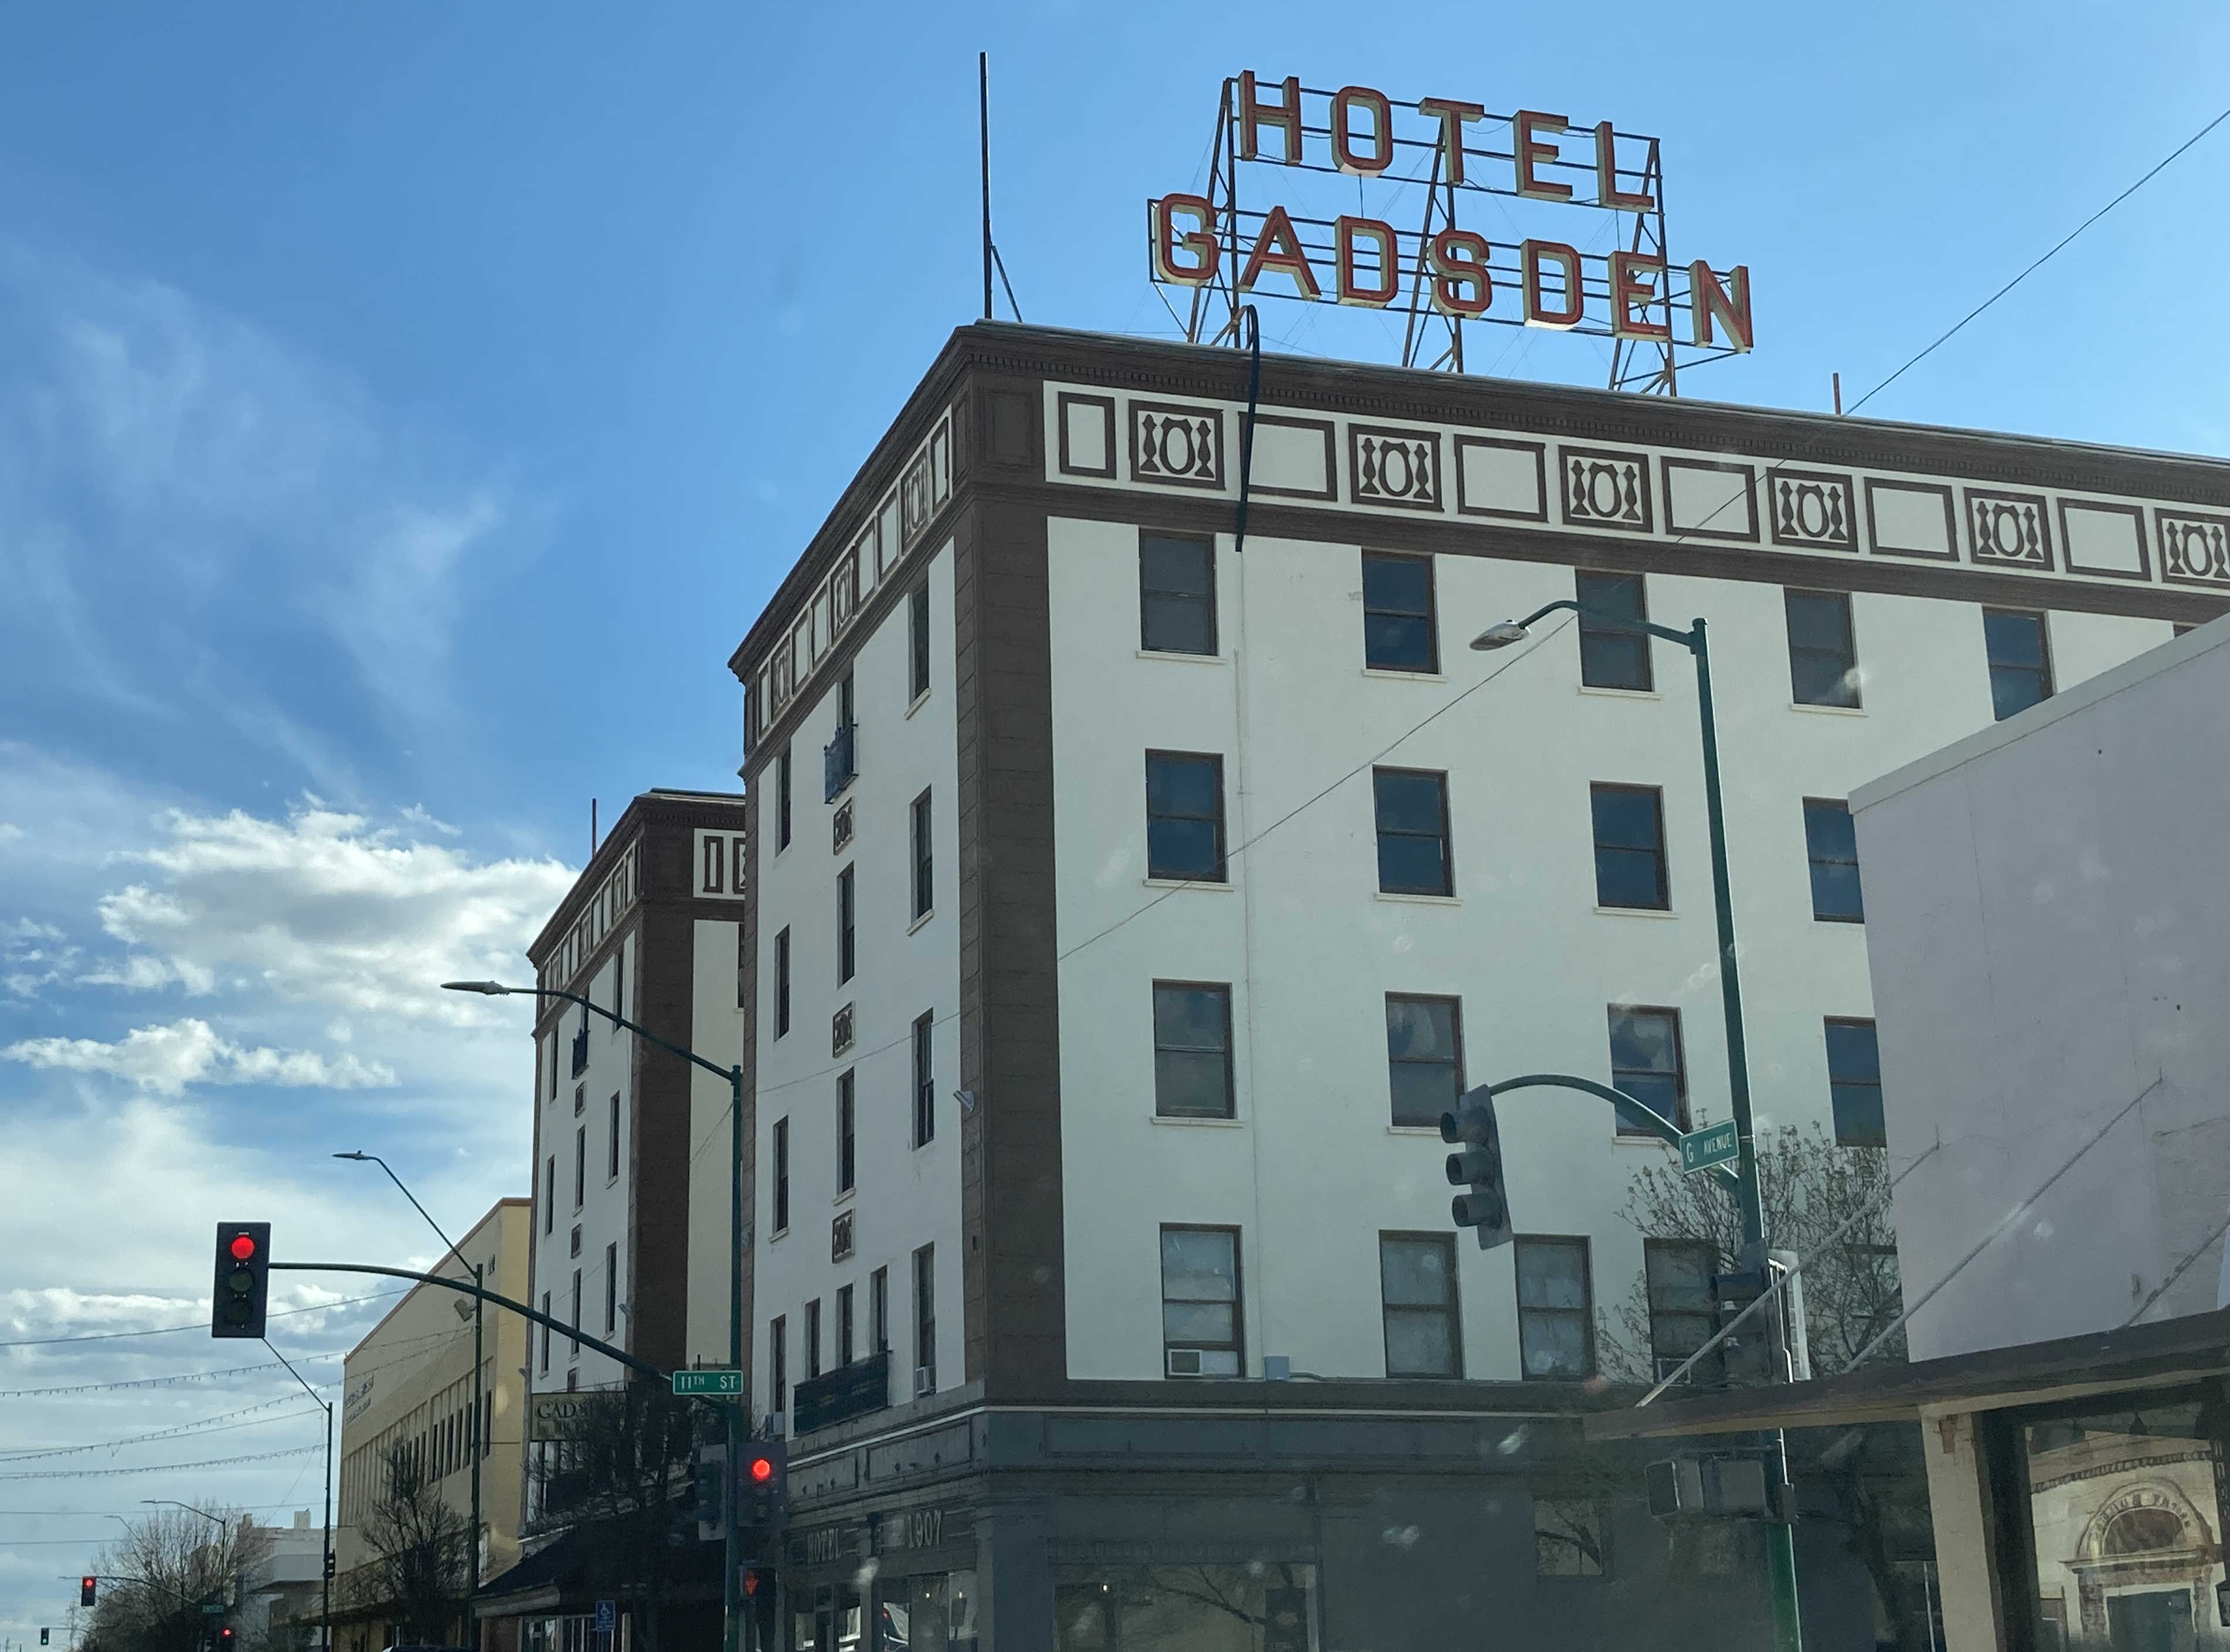 Gadsden Hotel